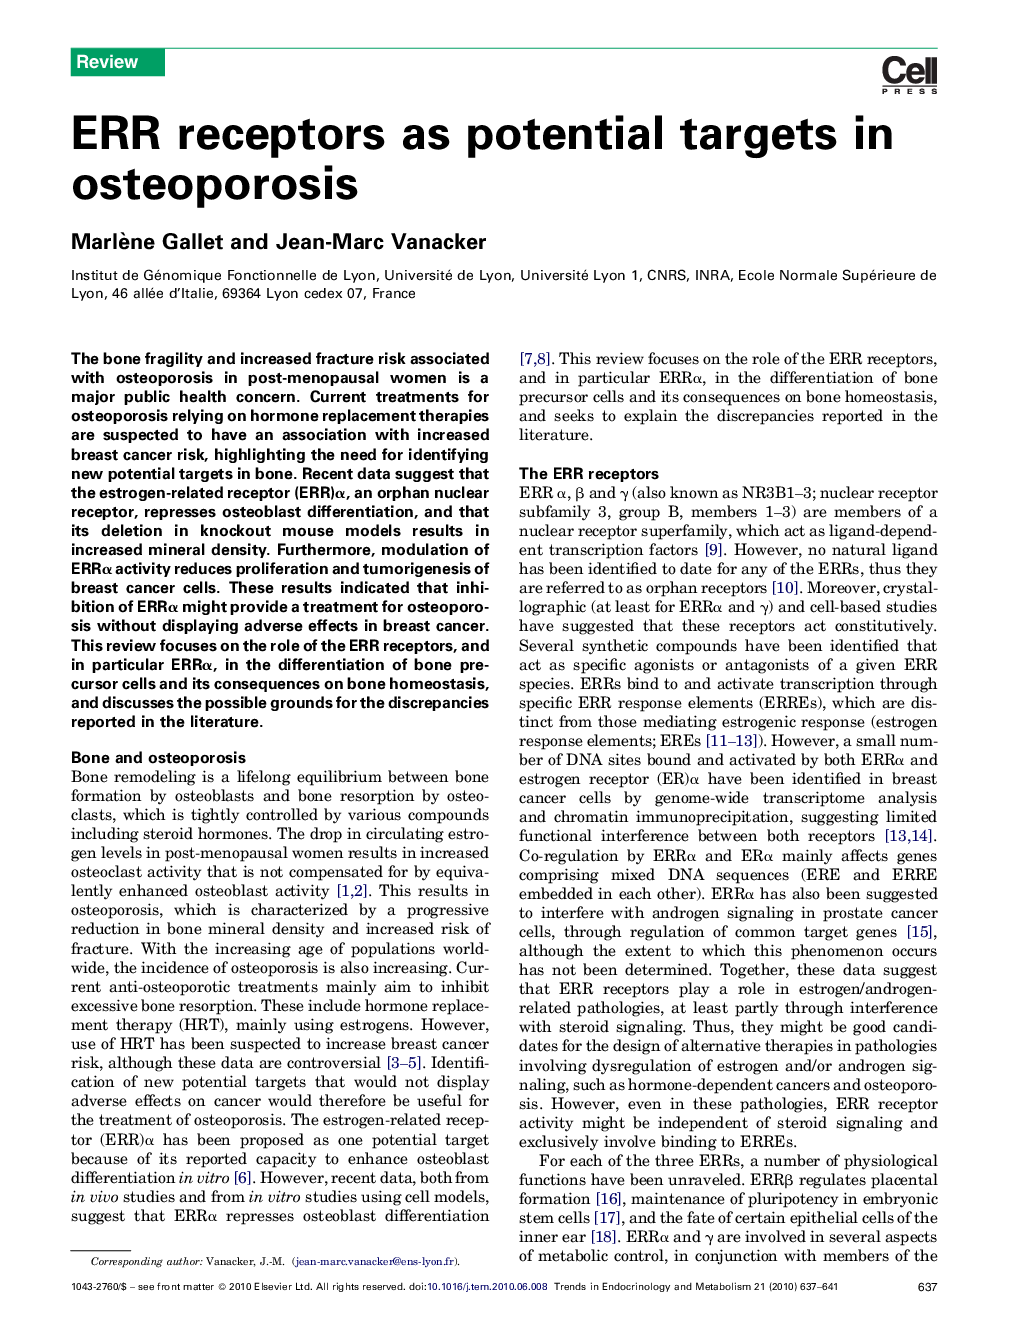 ERR receptors as potential targets in osteoporosis